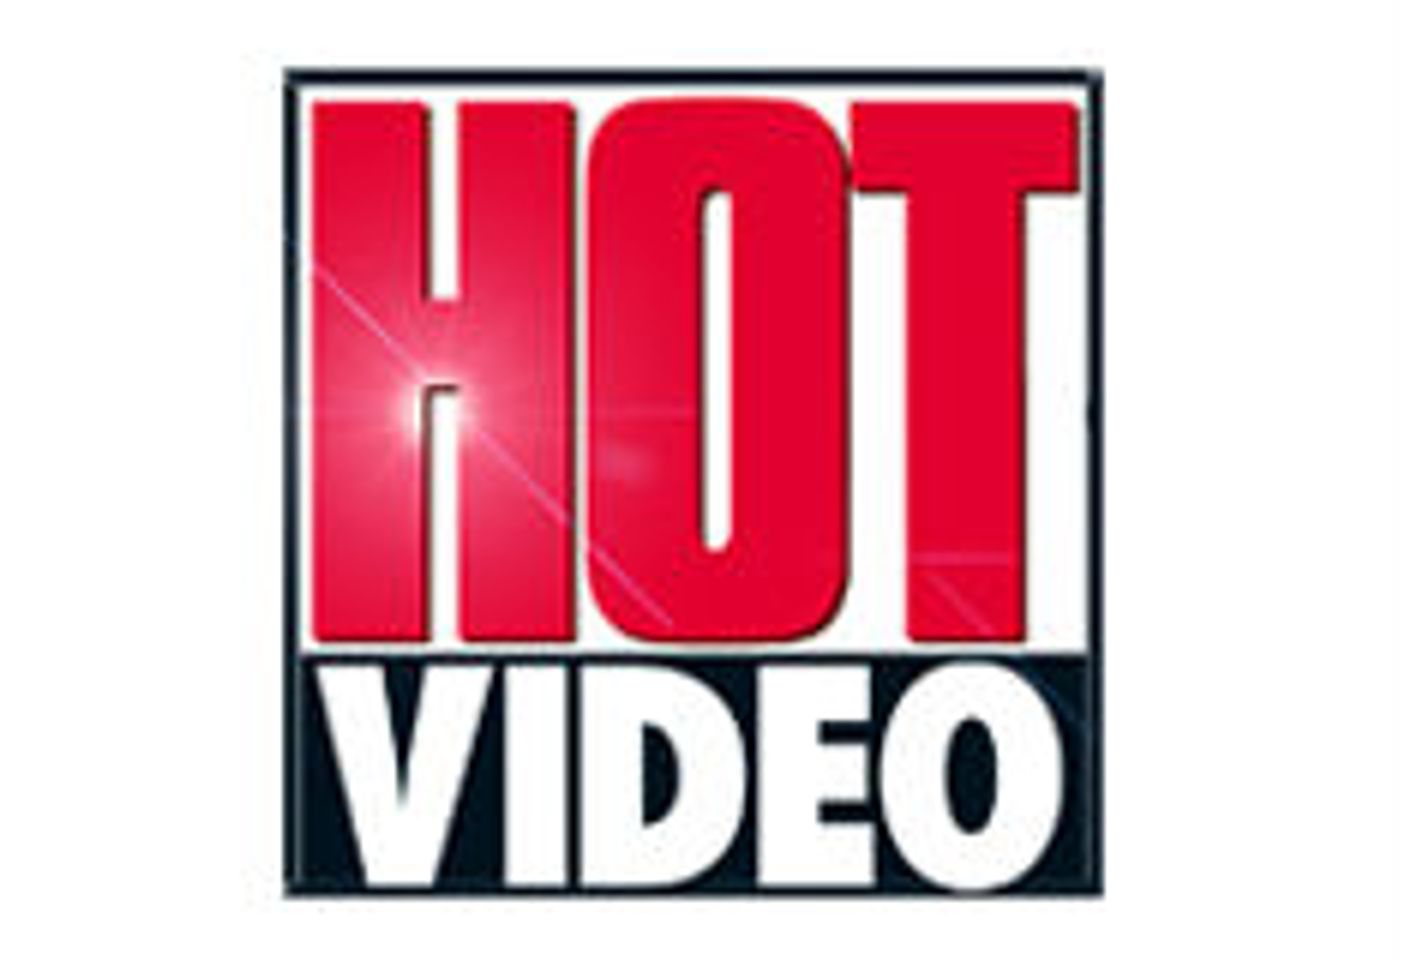 Hot Video Magazine Names New Management Team